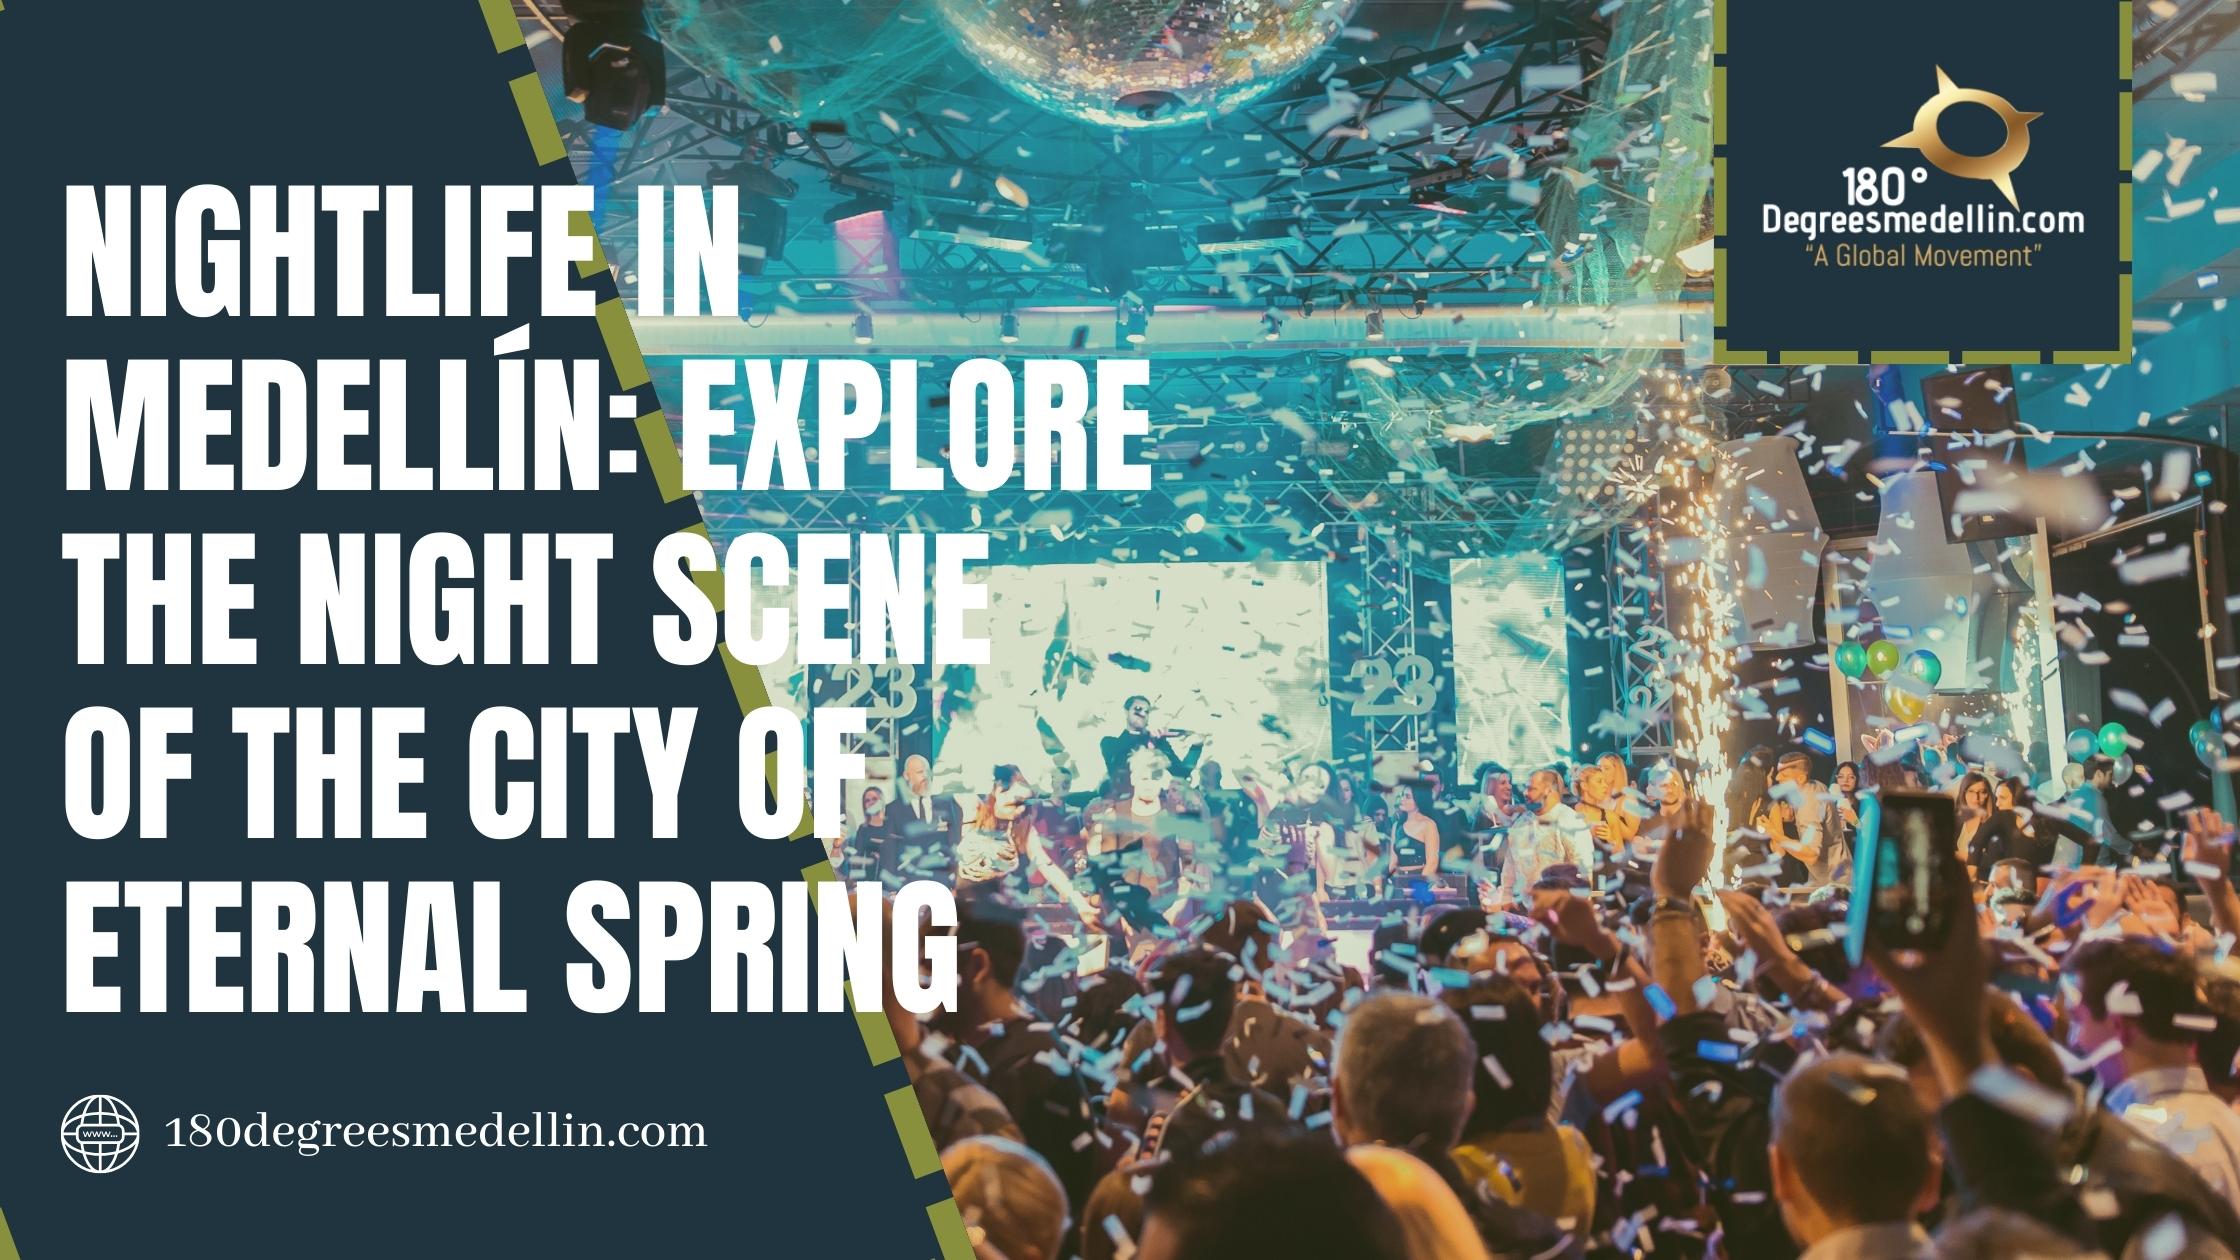 Nightlife in Medellín Explore the Night Scene of the City of Eternal Spring